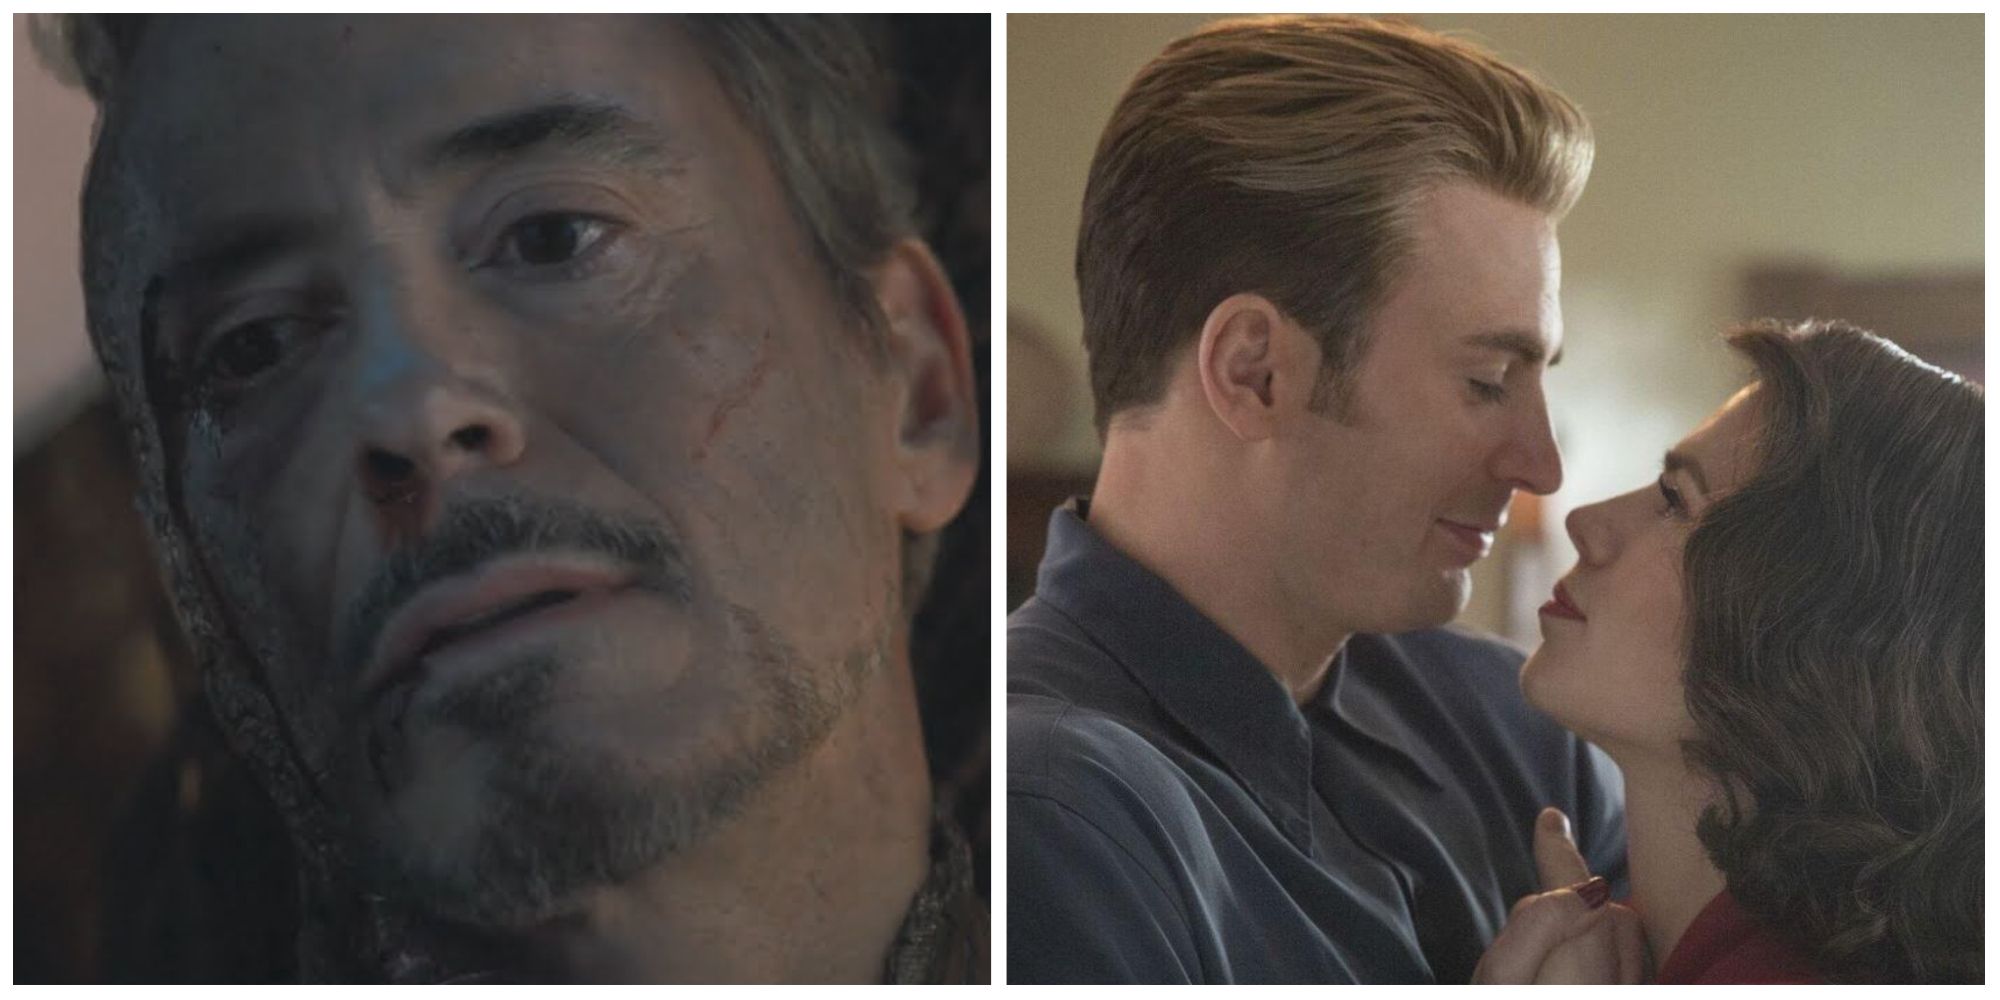 Robert Downey Jr. as Tony Stark, Iron Man. Chris Evans as Steve Rogers, Captain America. Hayley Atwell as Peggy Carter.